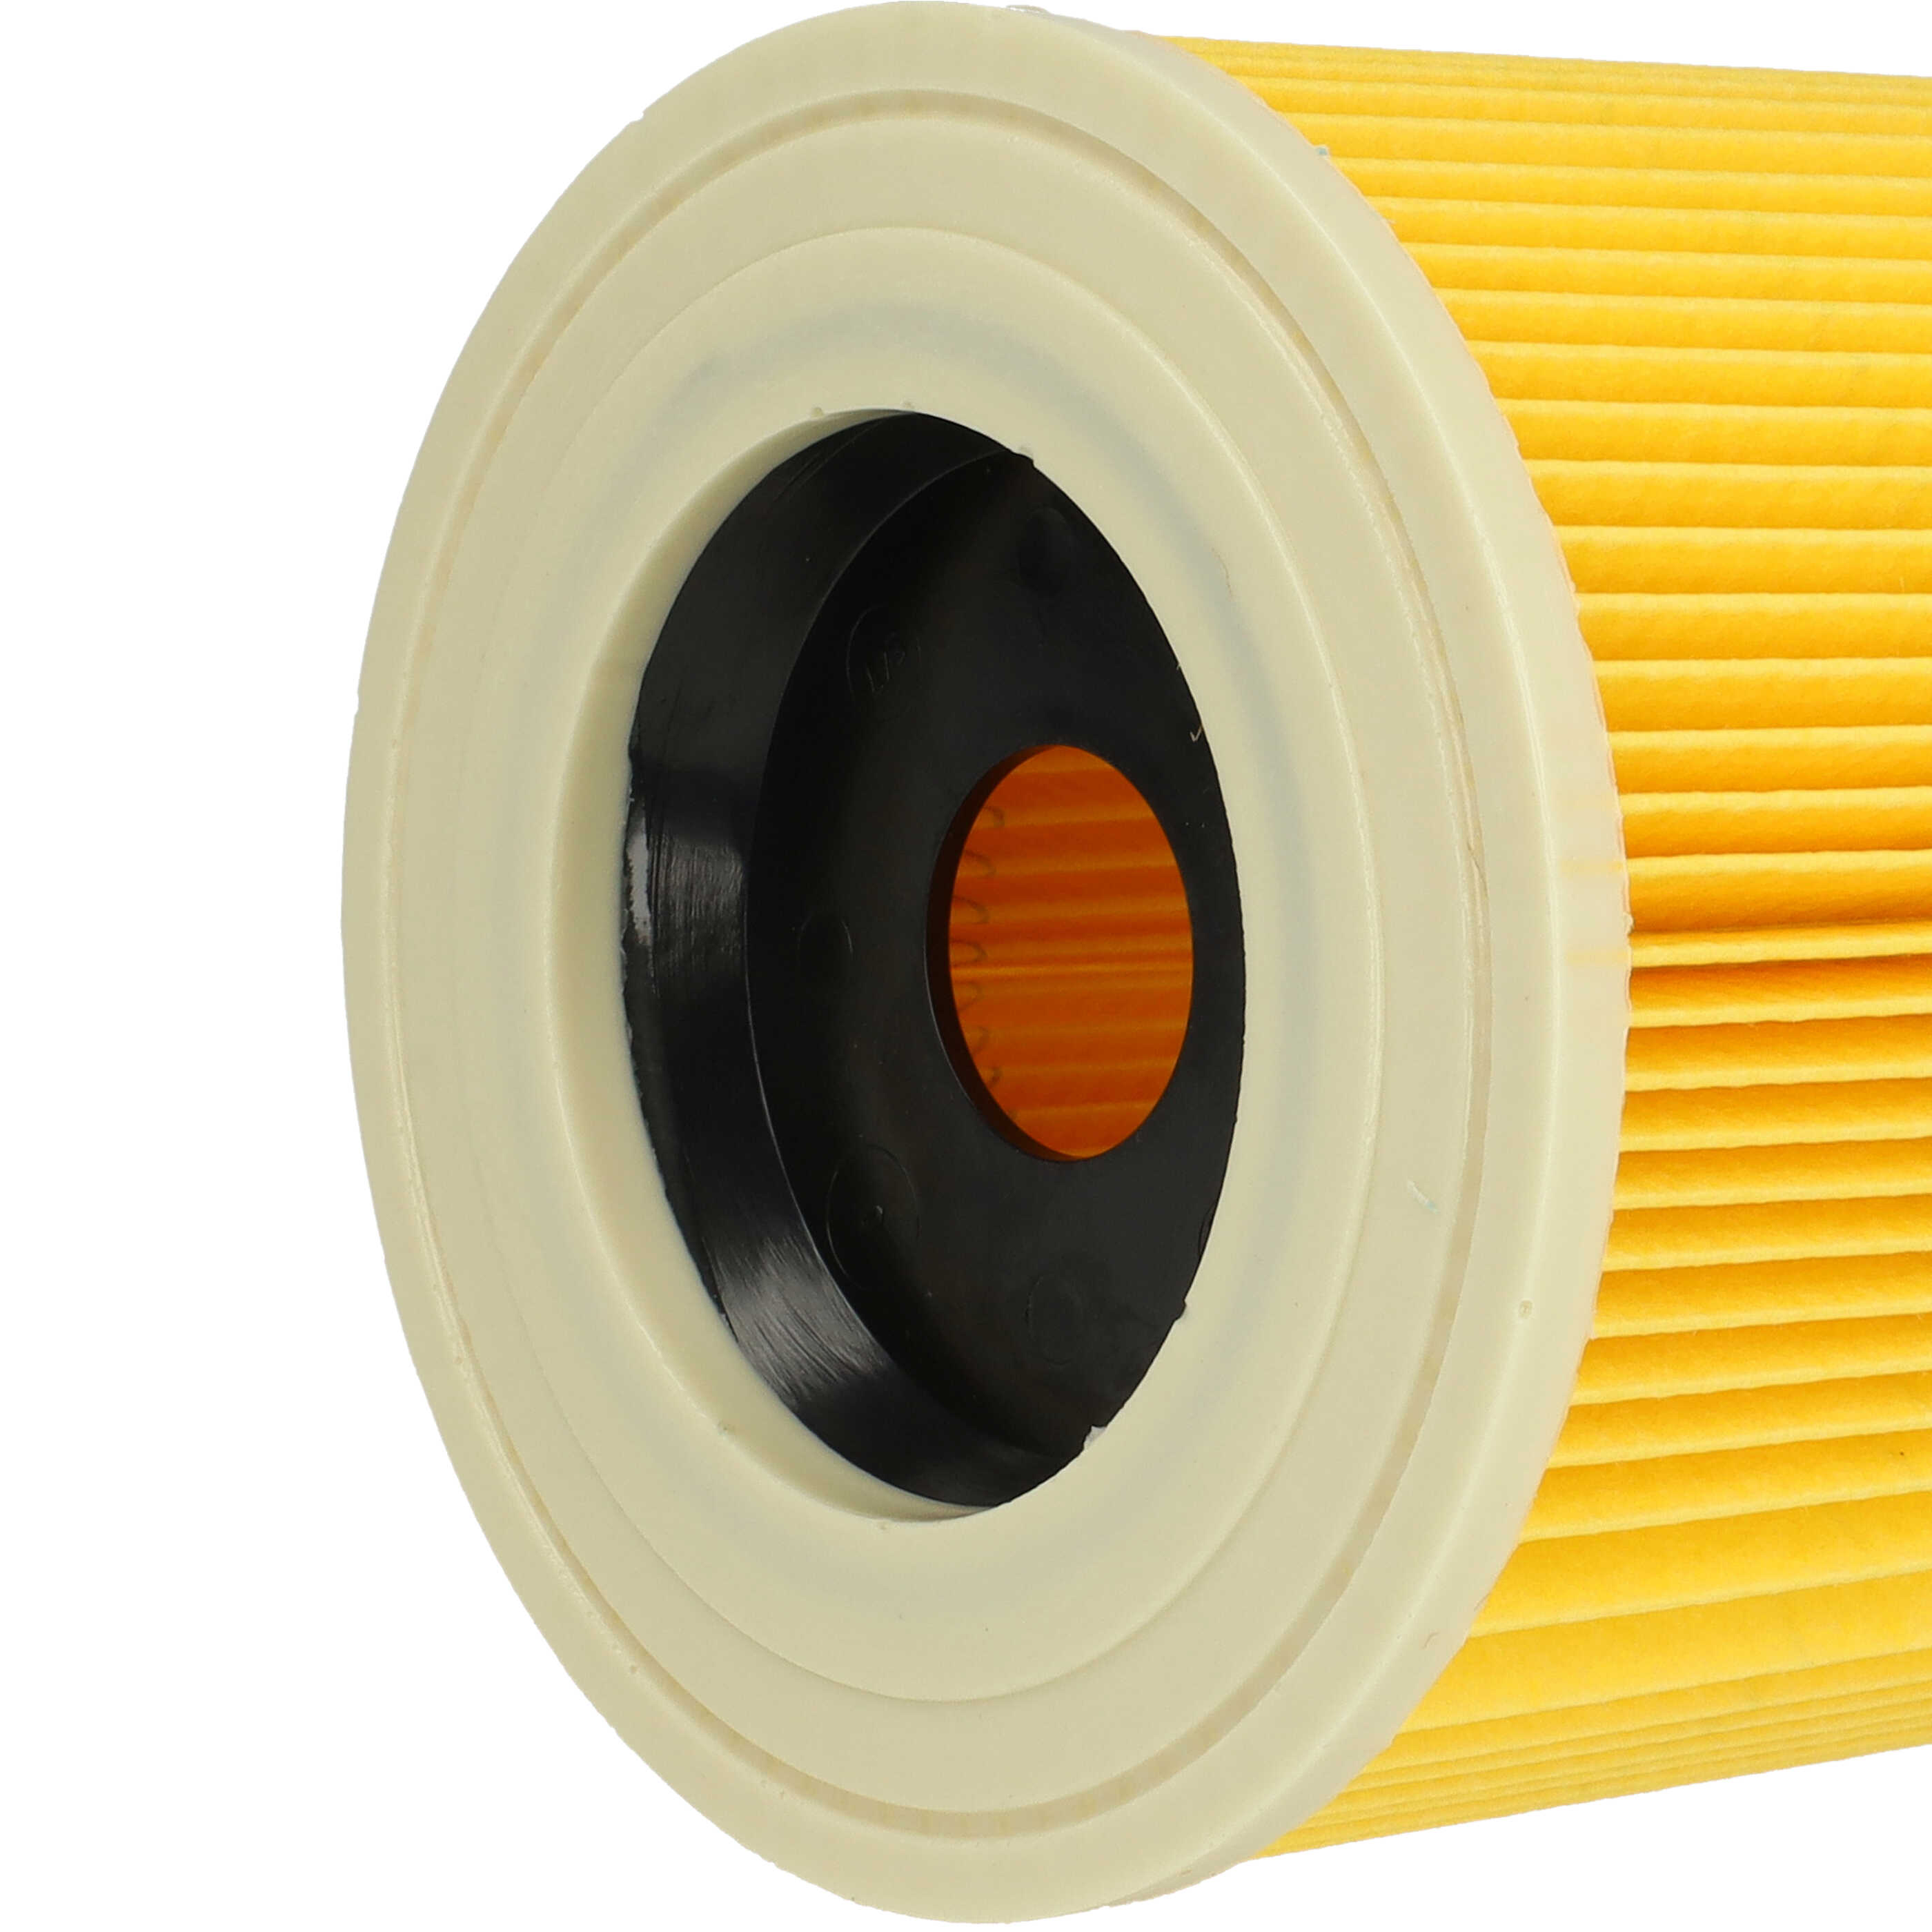 1x cartridge filter replaces Kärcher 2.863-303.0, 6.414-552.0, 6.414-547.0 for PowerPlusVacuum Cleaner, yellow